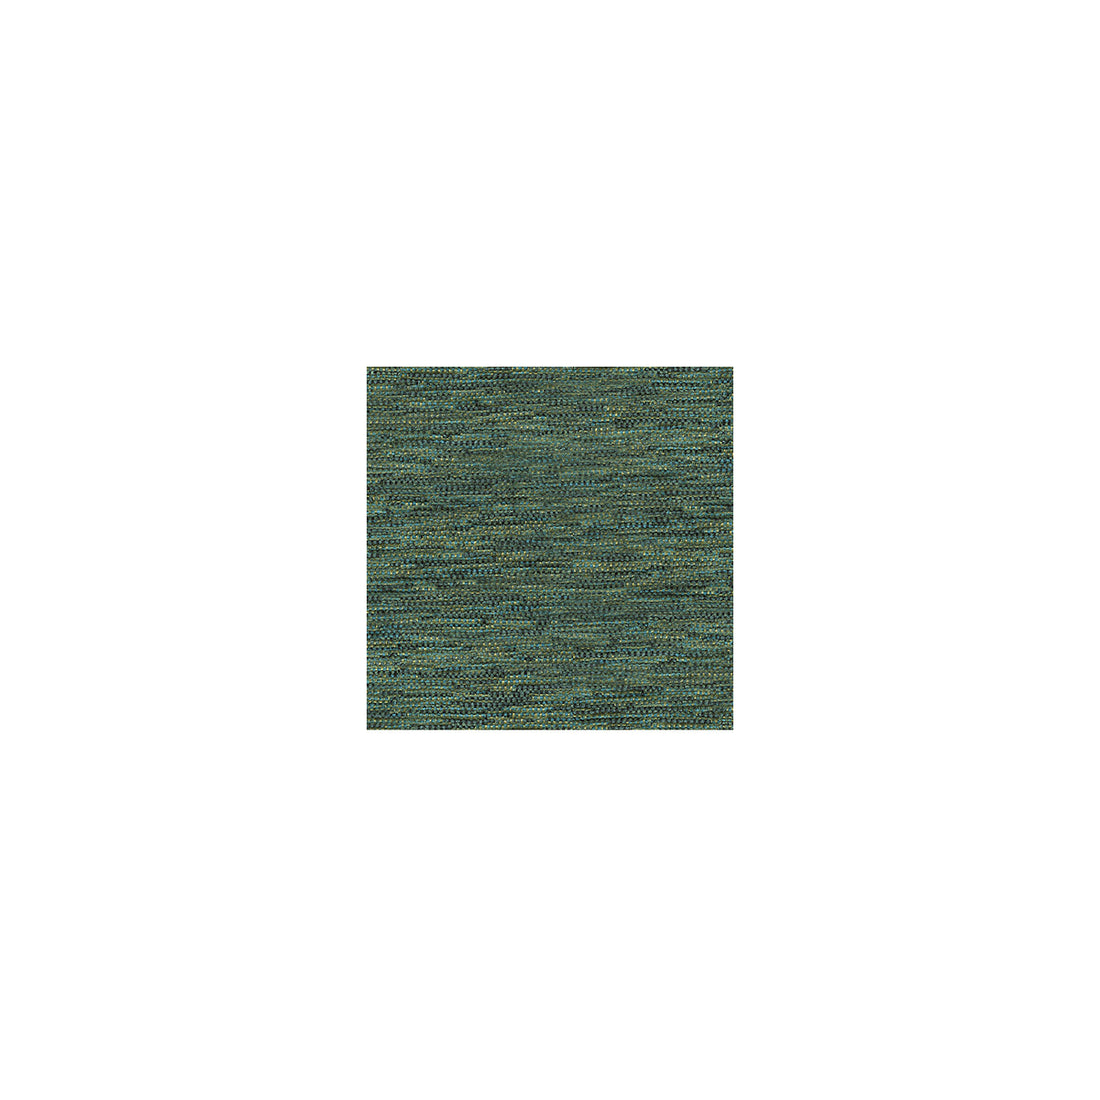 Dune Wood fabric in pool color - pattern 30136.5.0 - by Kravet Smart